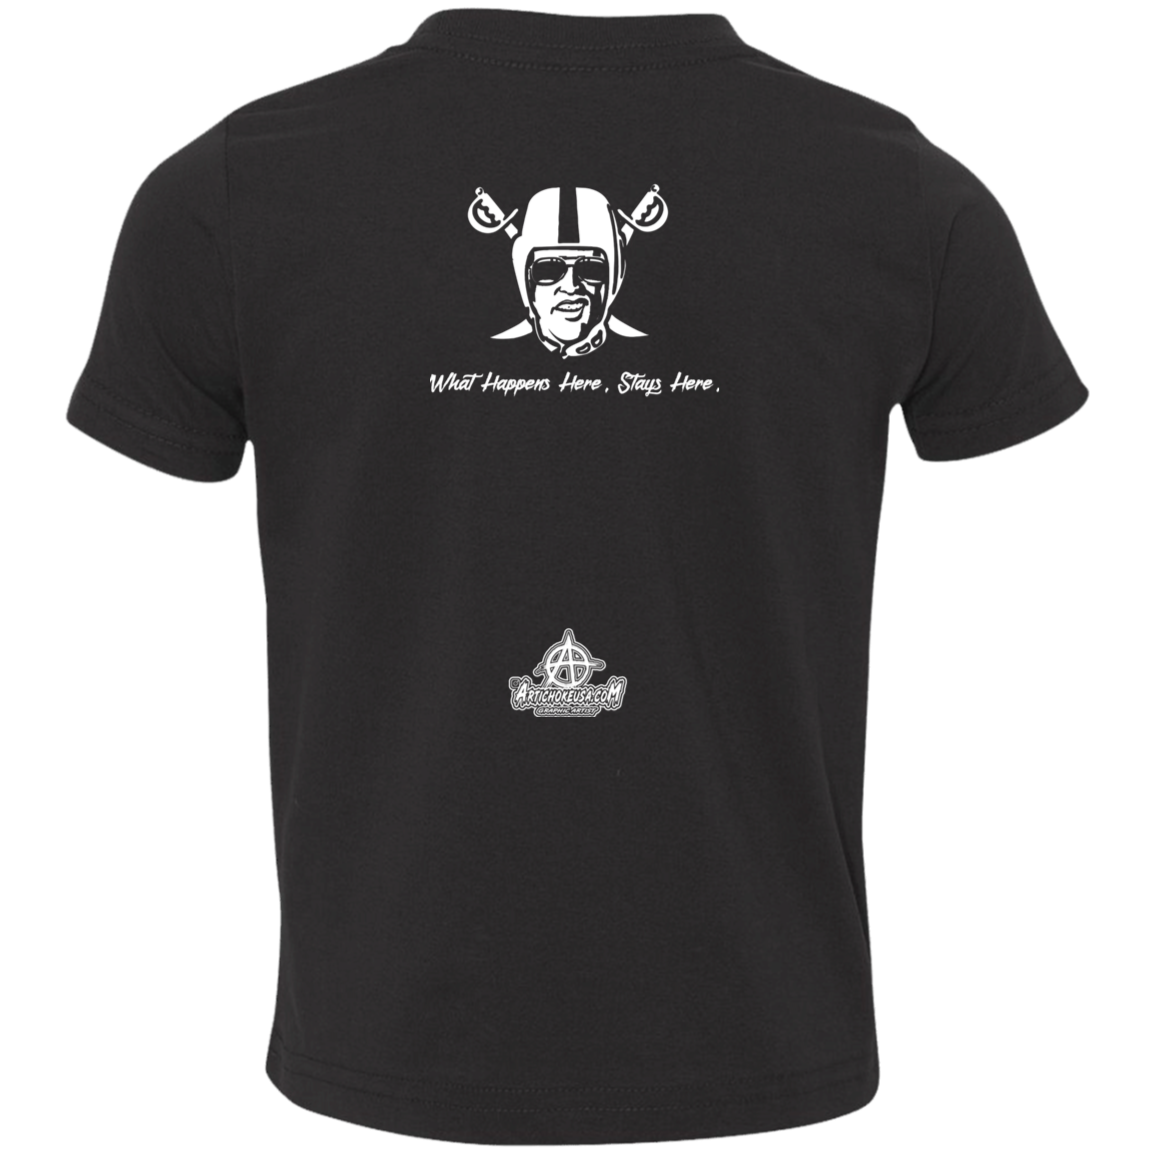 ArtichokeUSA Custom Design. Las Vegas Raiders. Las Vegas / Elvis Presley Parody Fan Art. Let's Create Your Own Team Design Today. Toddler Jersey T-Shirt